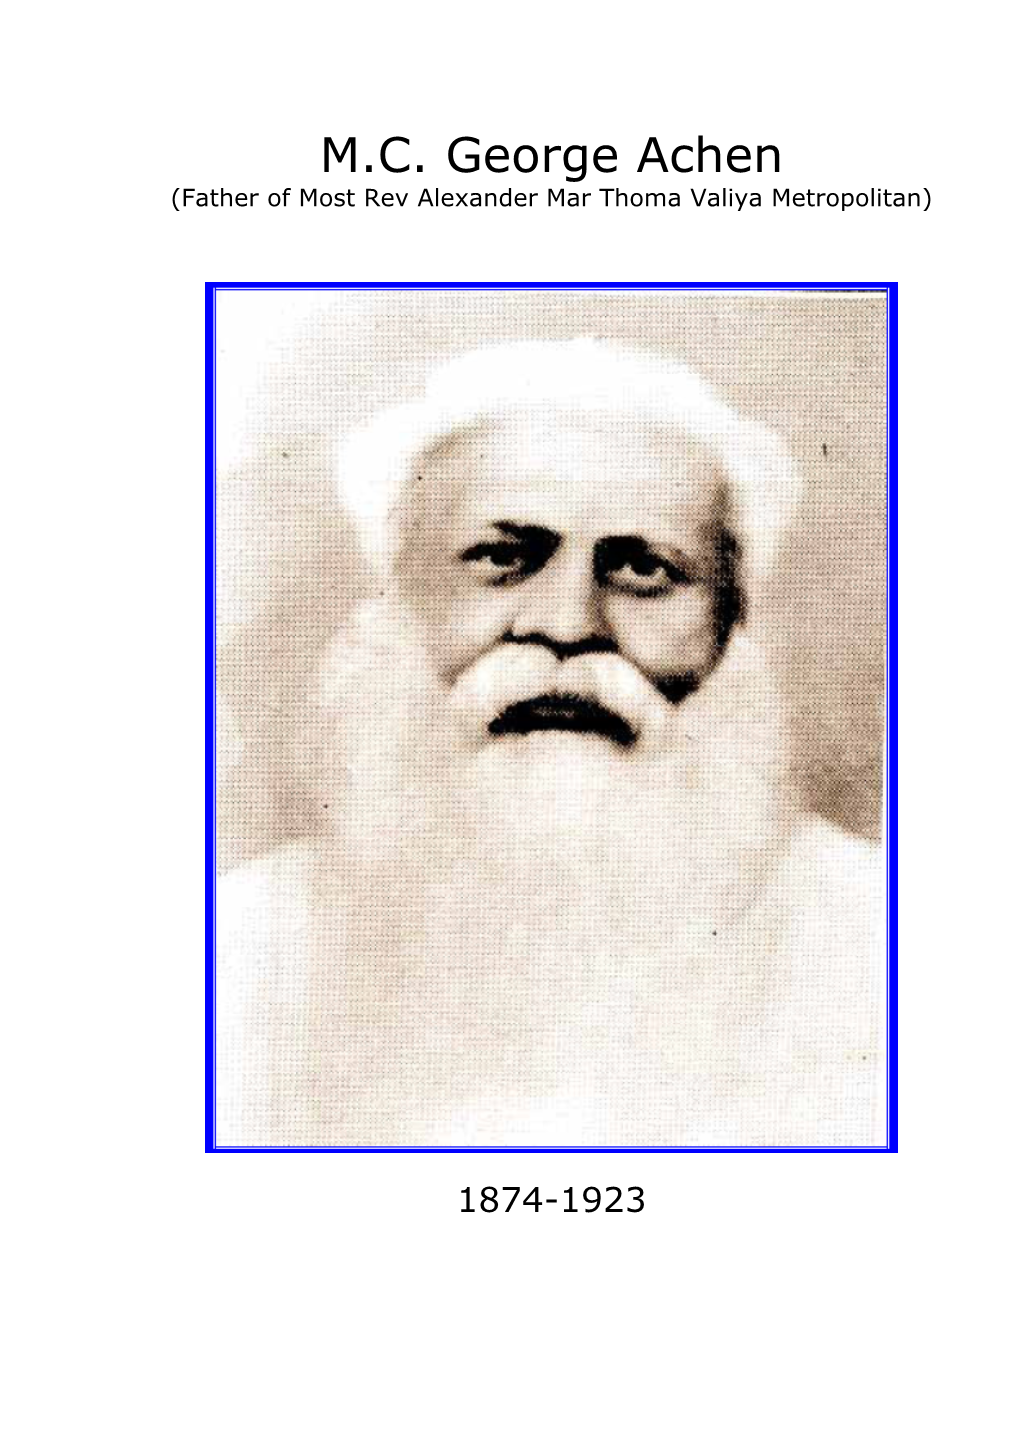 M. C. George Achen Kuriannor Maliakal (Father of Most Rev Alexander Mar Thoma Valiya Metropolitan) 17 April 1874 – 13 October 1923 4 Medam 1049-27 Kanni 1099 M.E